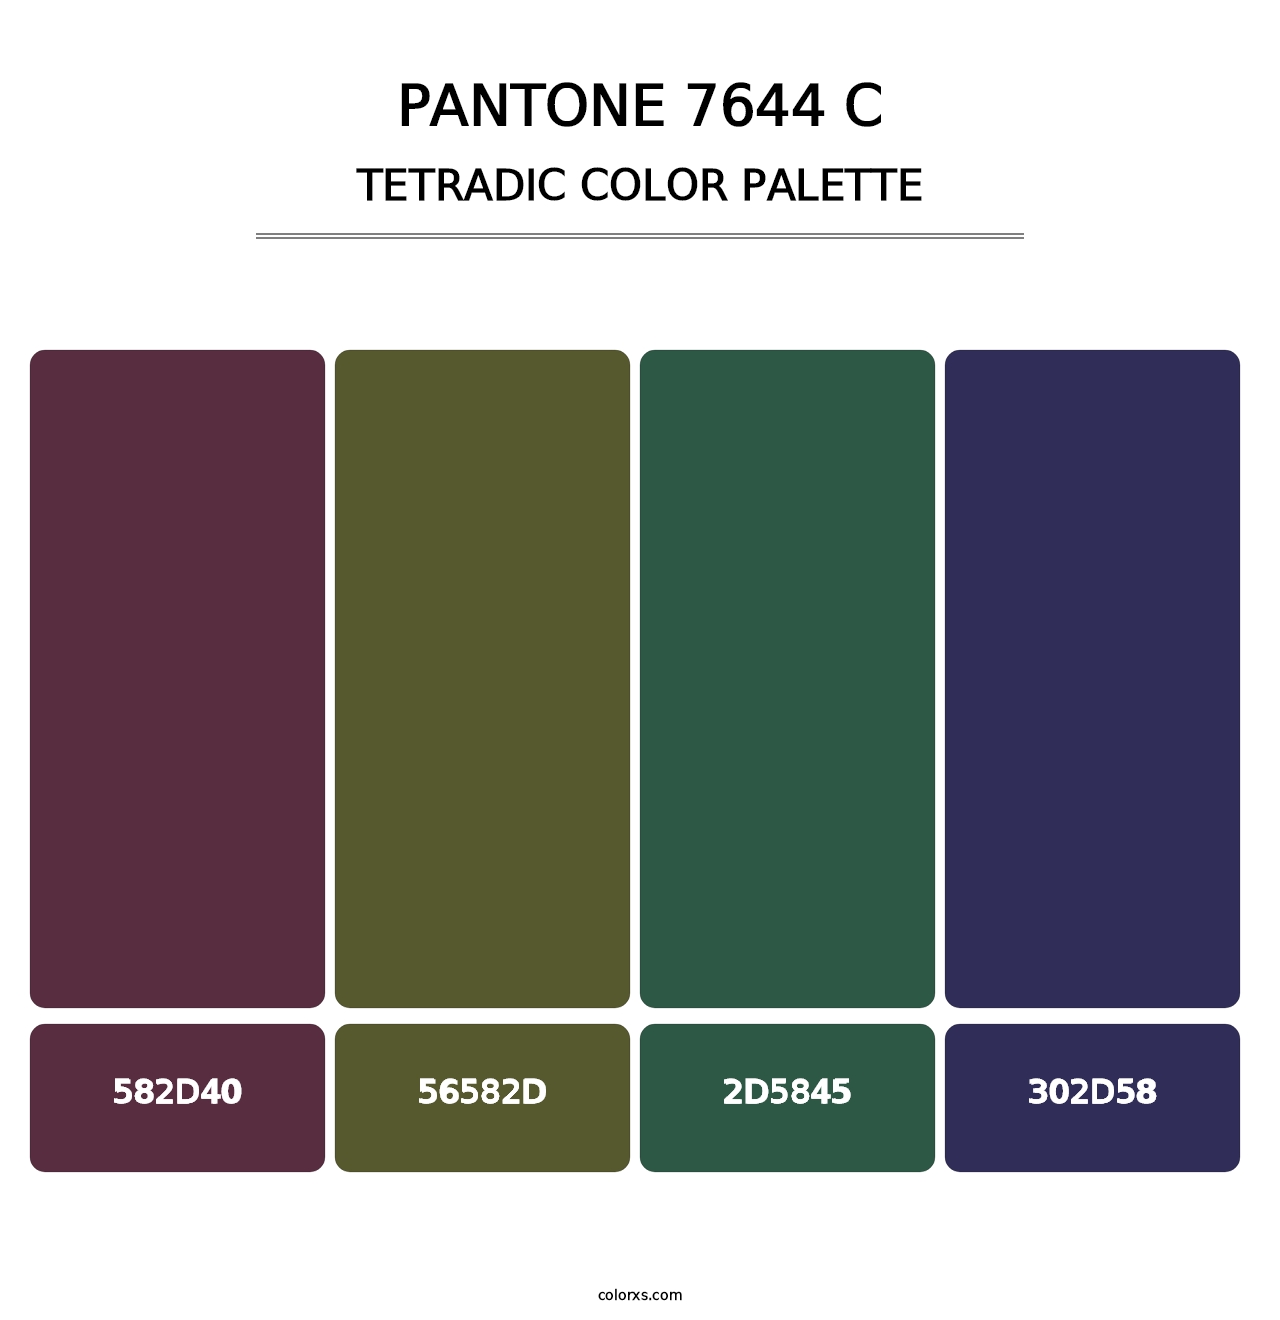 PANTONE 7644 C - Tetradic Color Palette